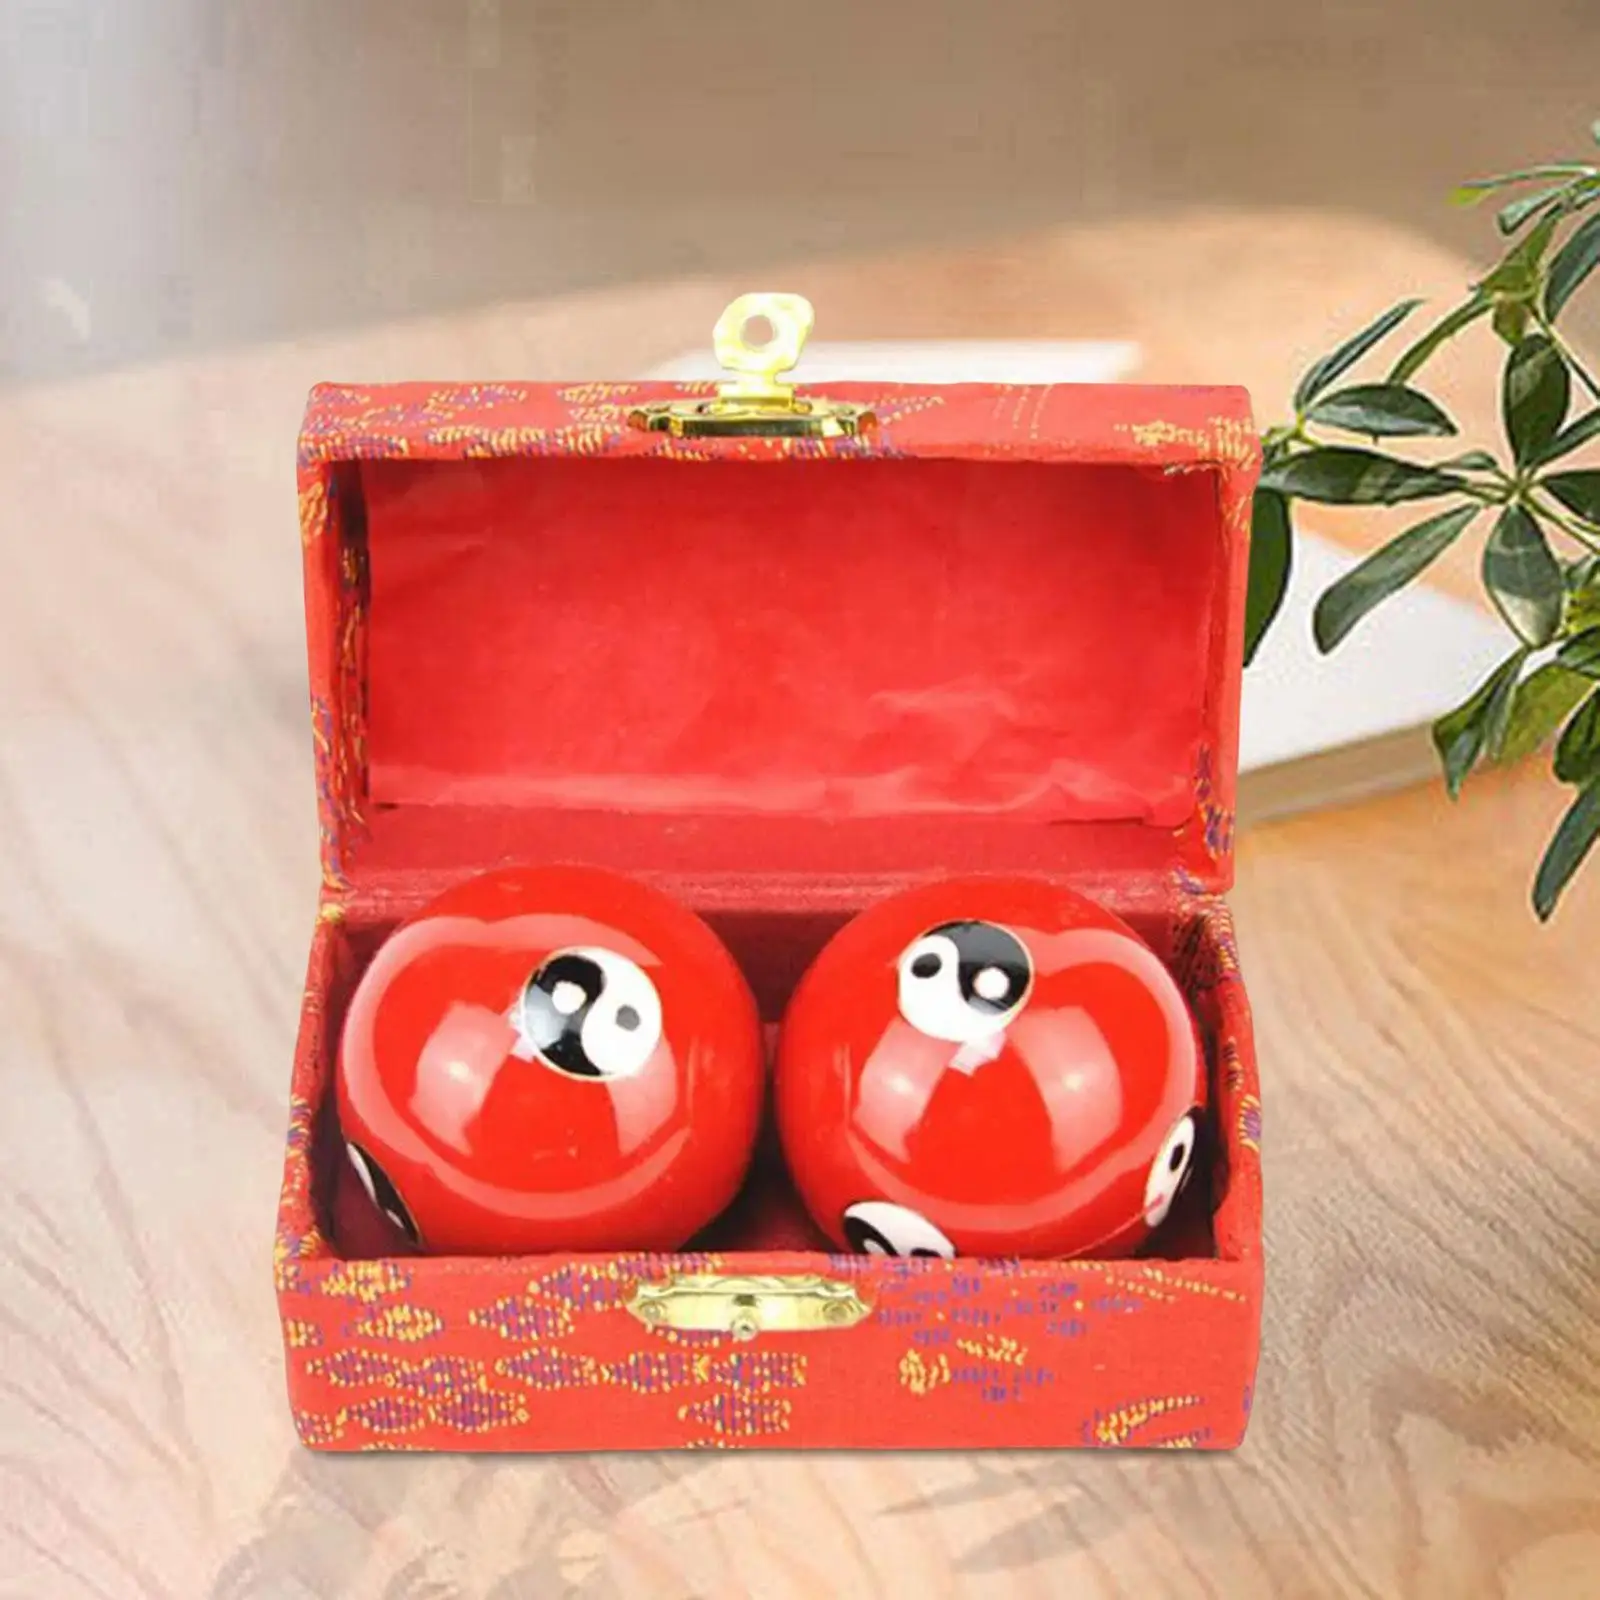 2x Massage Balls with Storage Box Hand Wrist Strengthening Chinese Baoding Balls for Seniors Children Elderly Middle Aged People